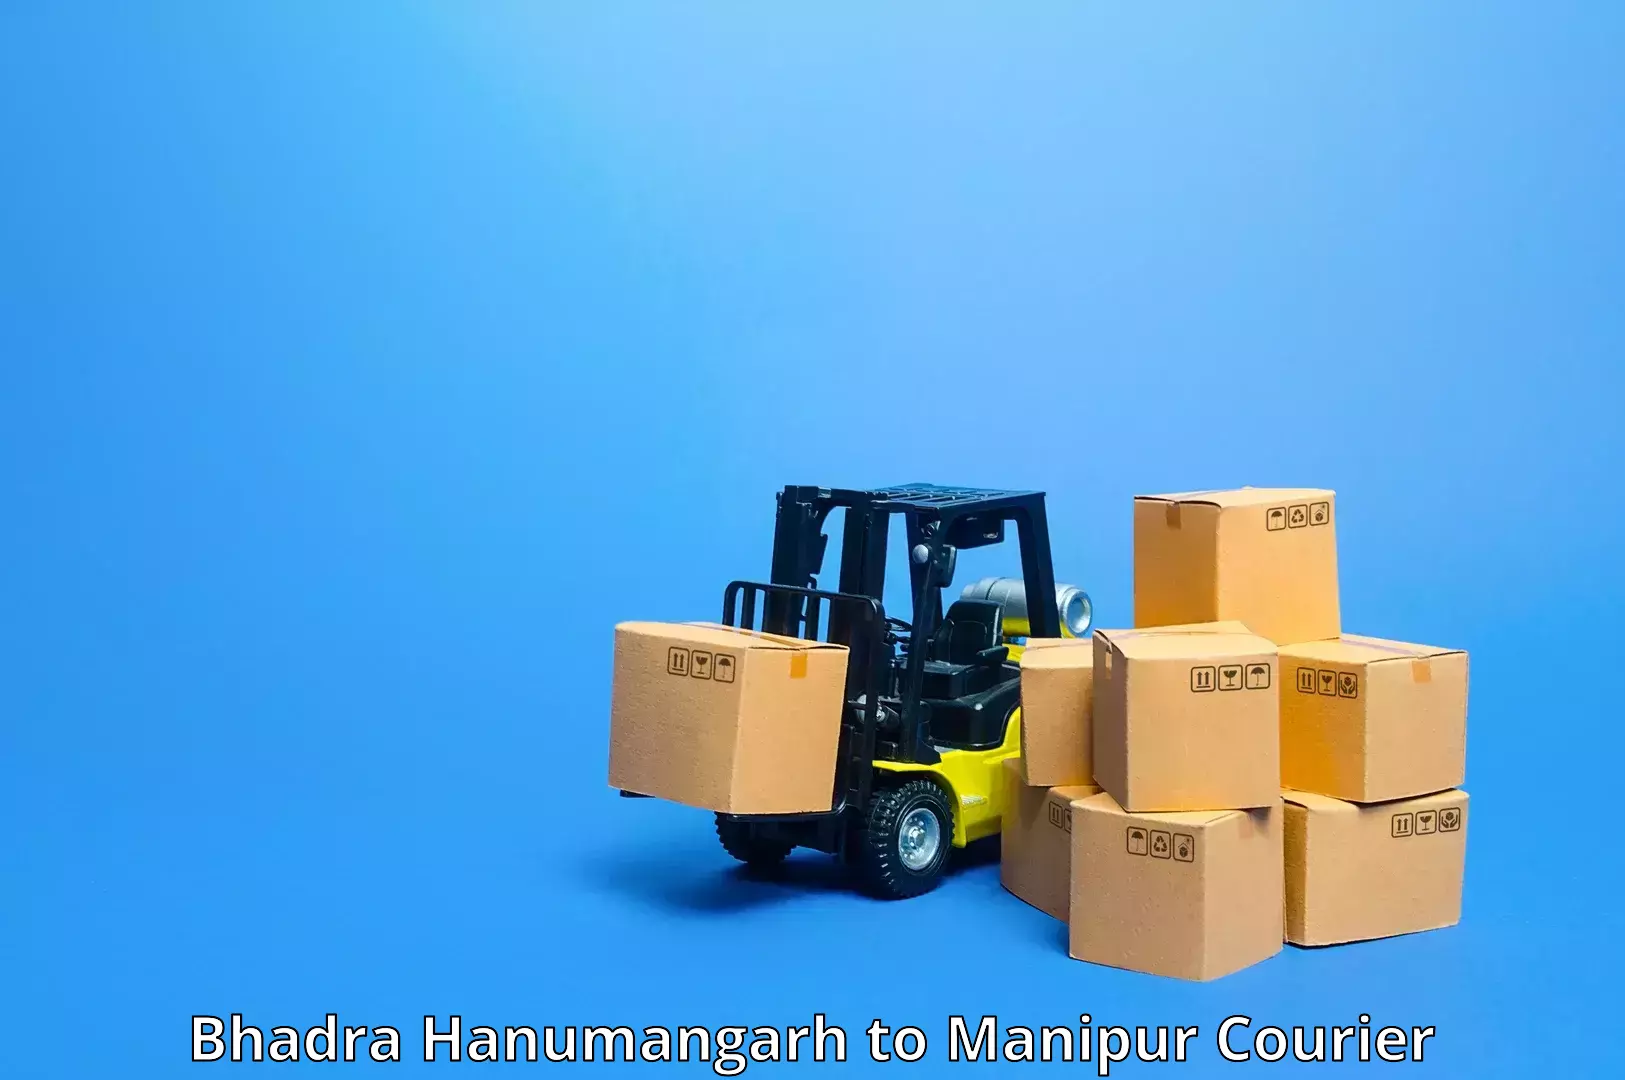 Efficient order fulfillment Bhadra Hanumangarh to Manipur